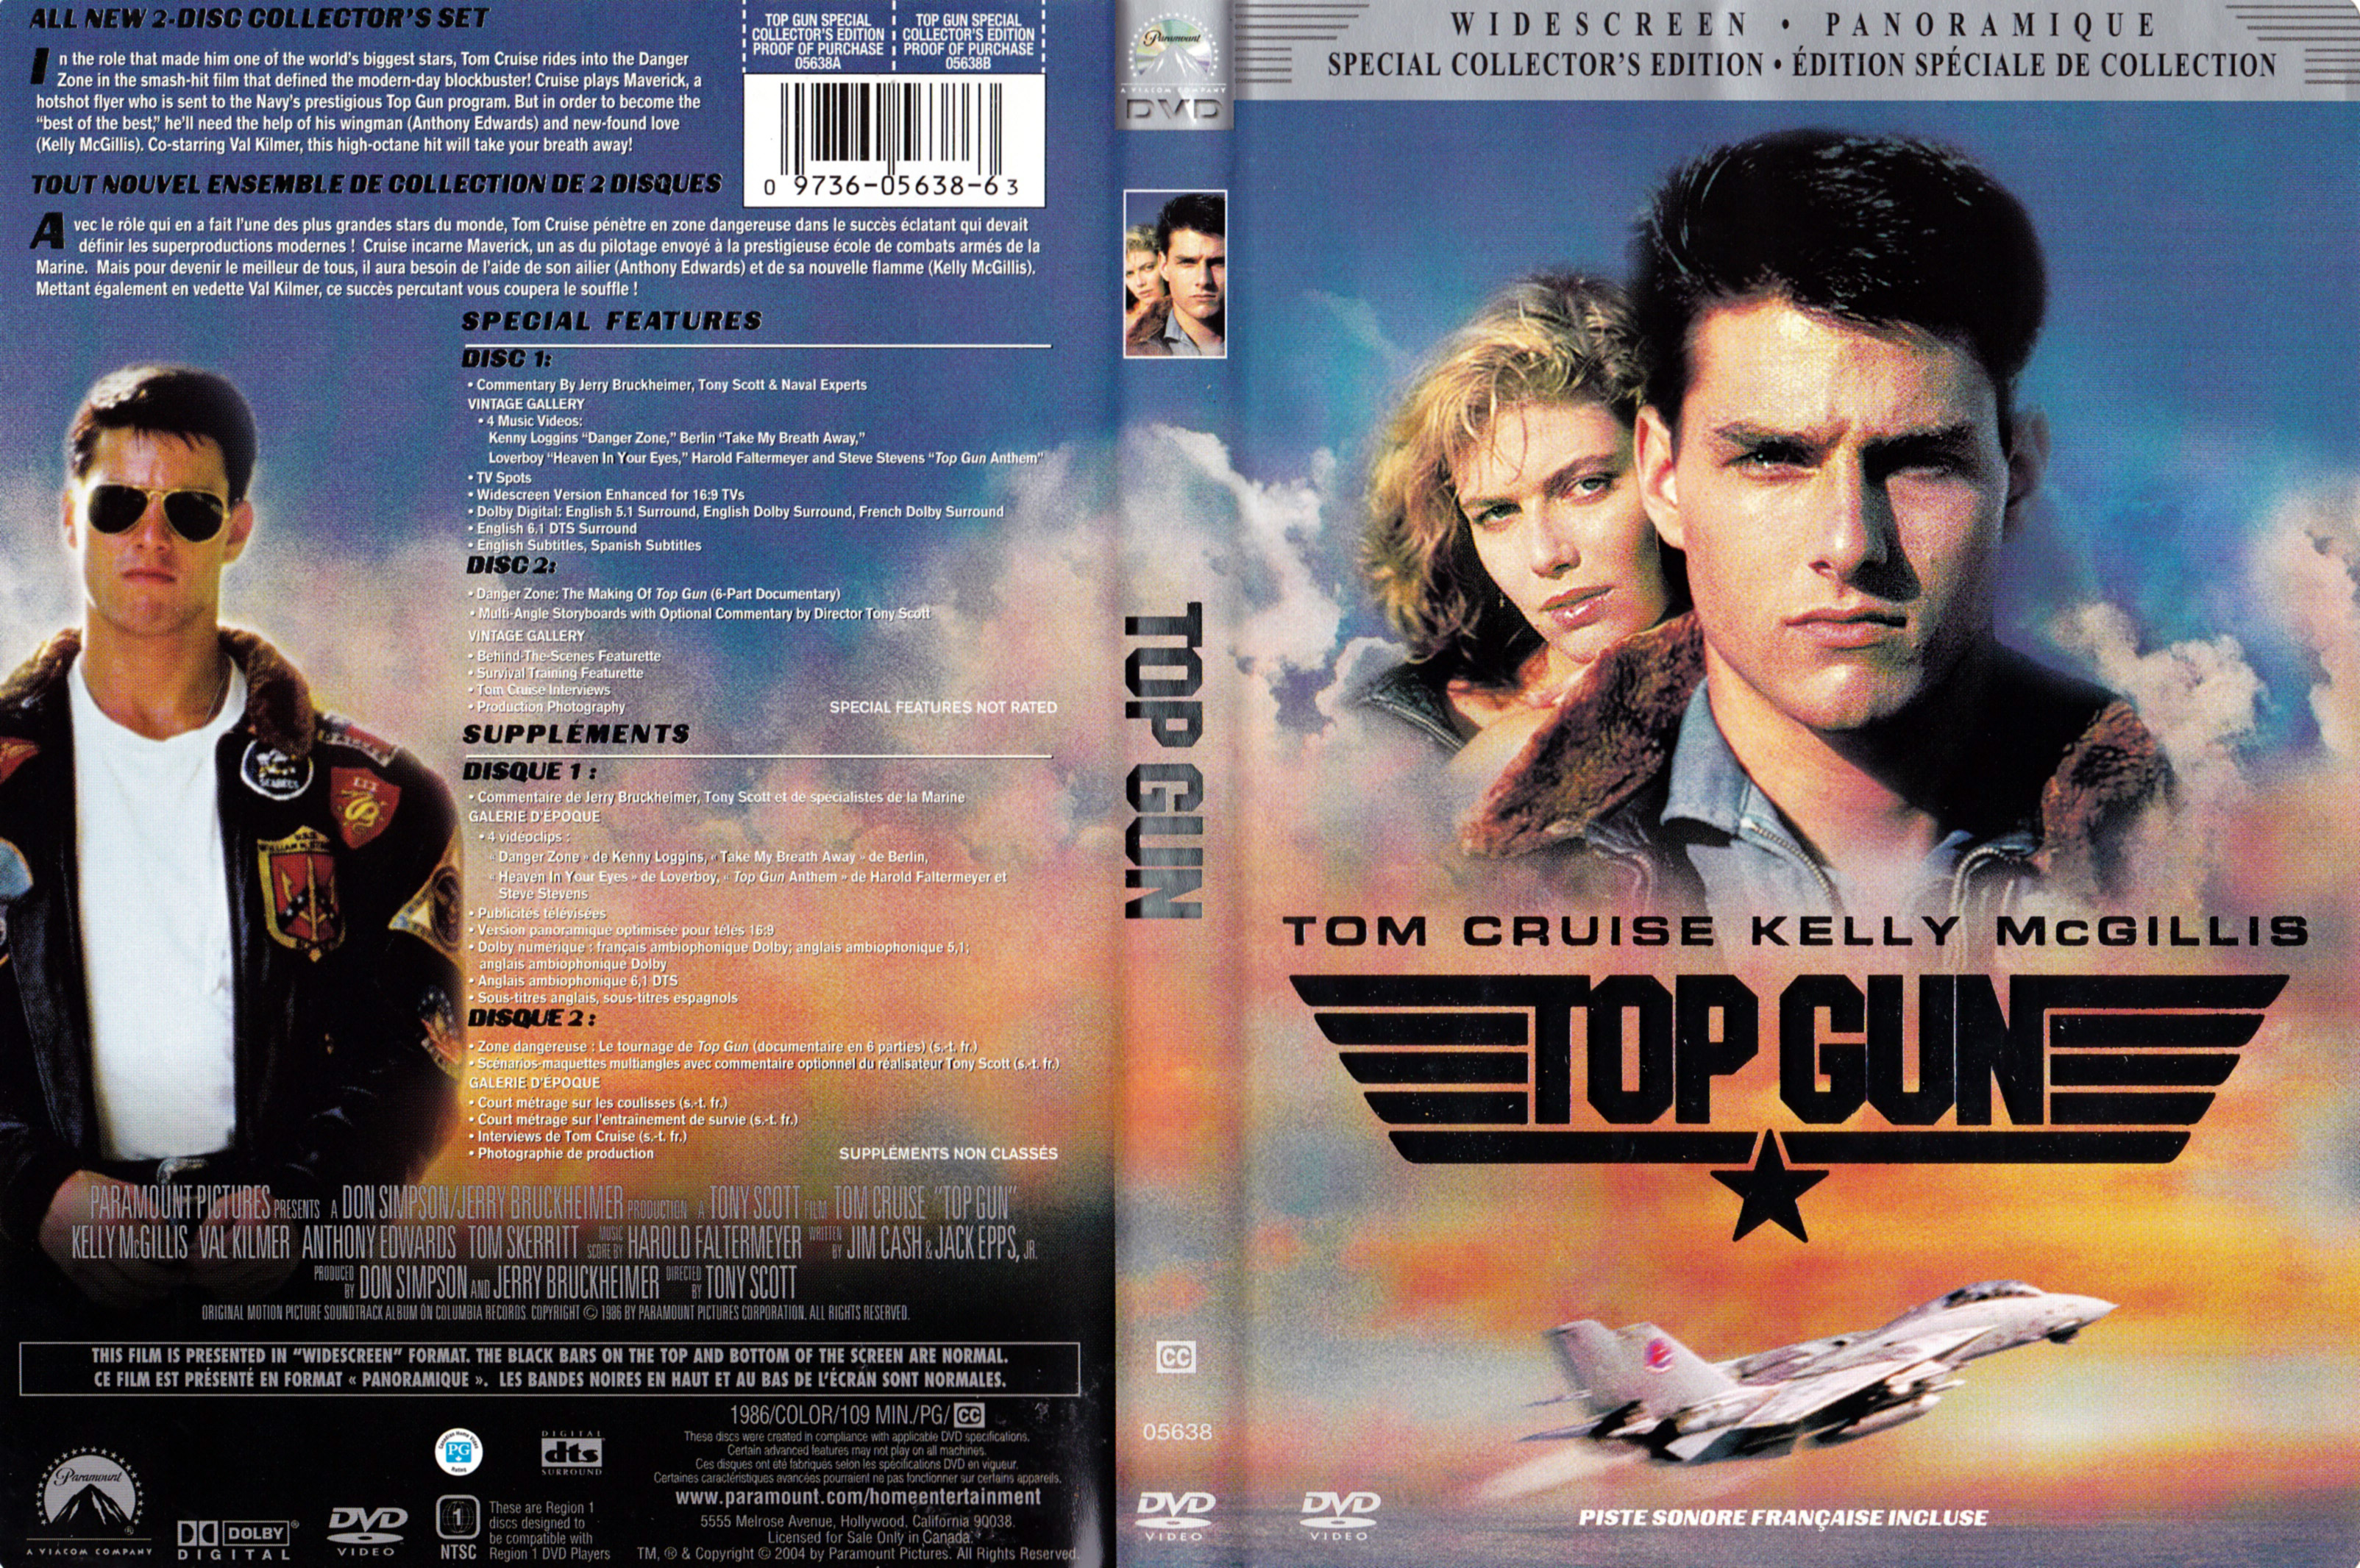 Jaquette DVD Top gun (Canadienne)